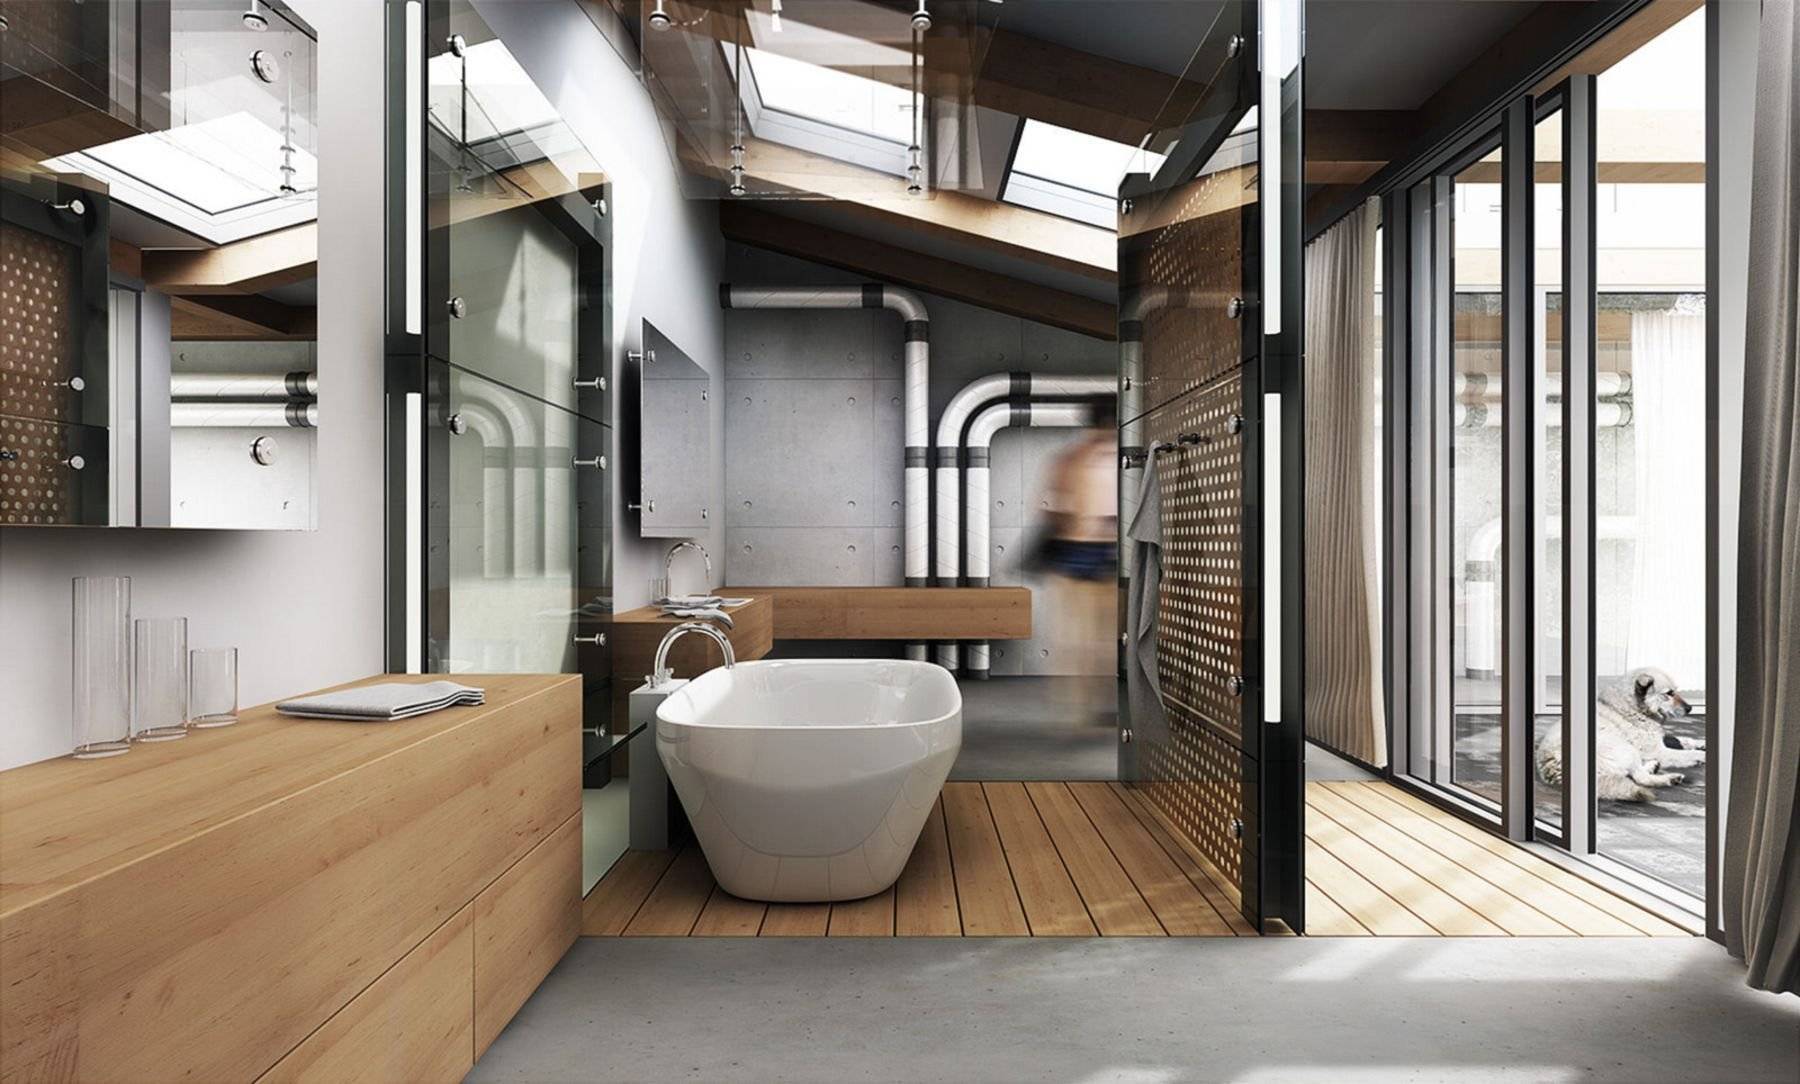 Ванная комната в стиле лофт: выбор отделки, цвета, мебели, сантехники и декора